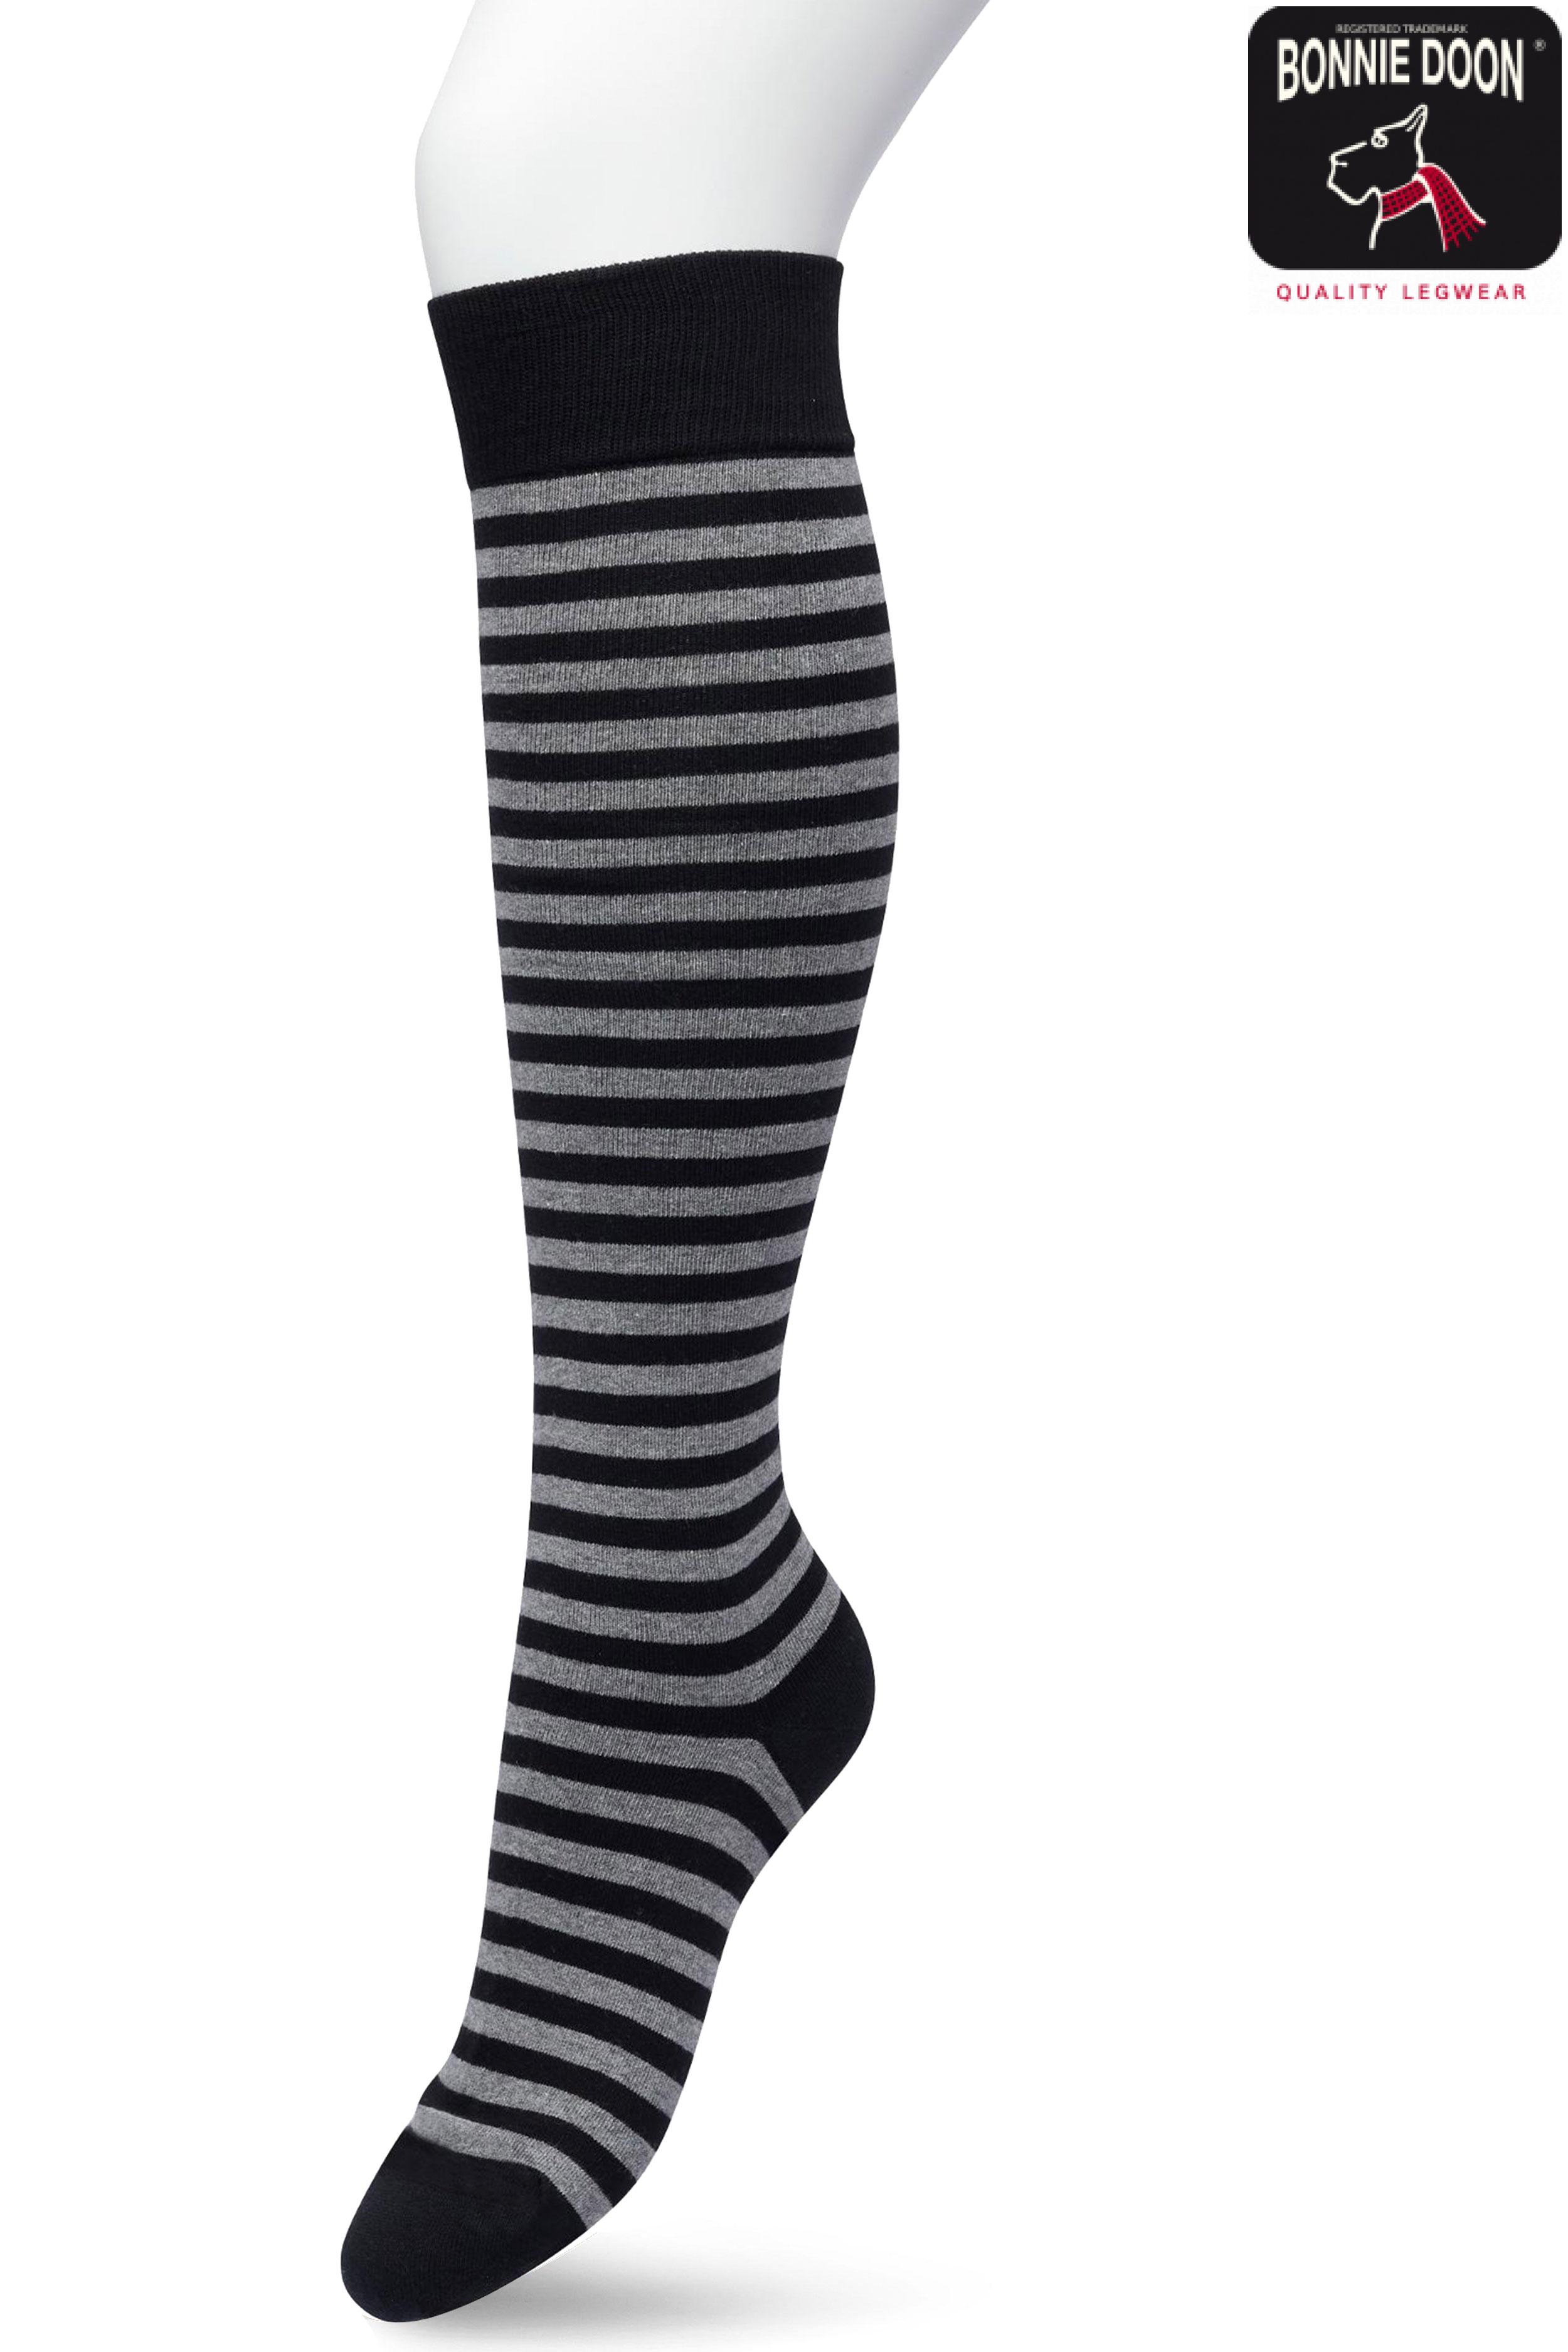 Basic stripe Knee High Black light grey heather